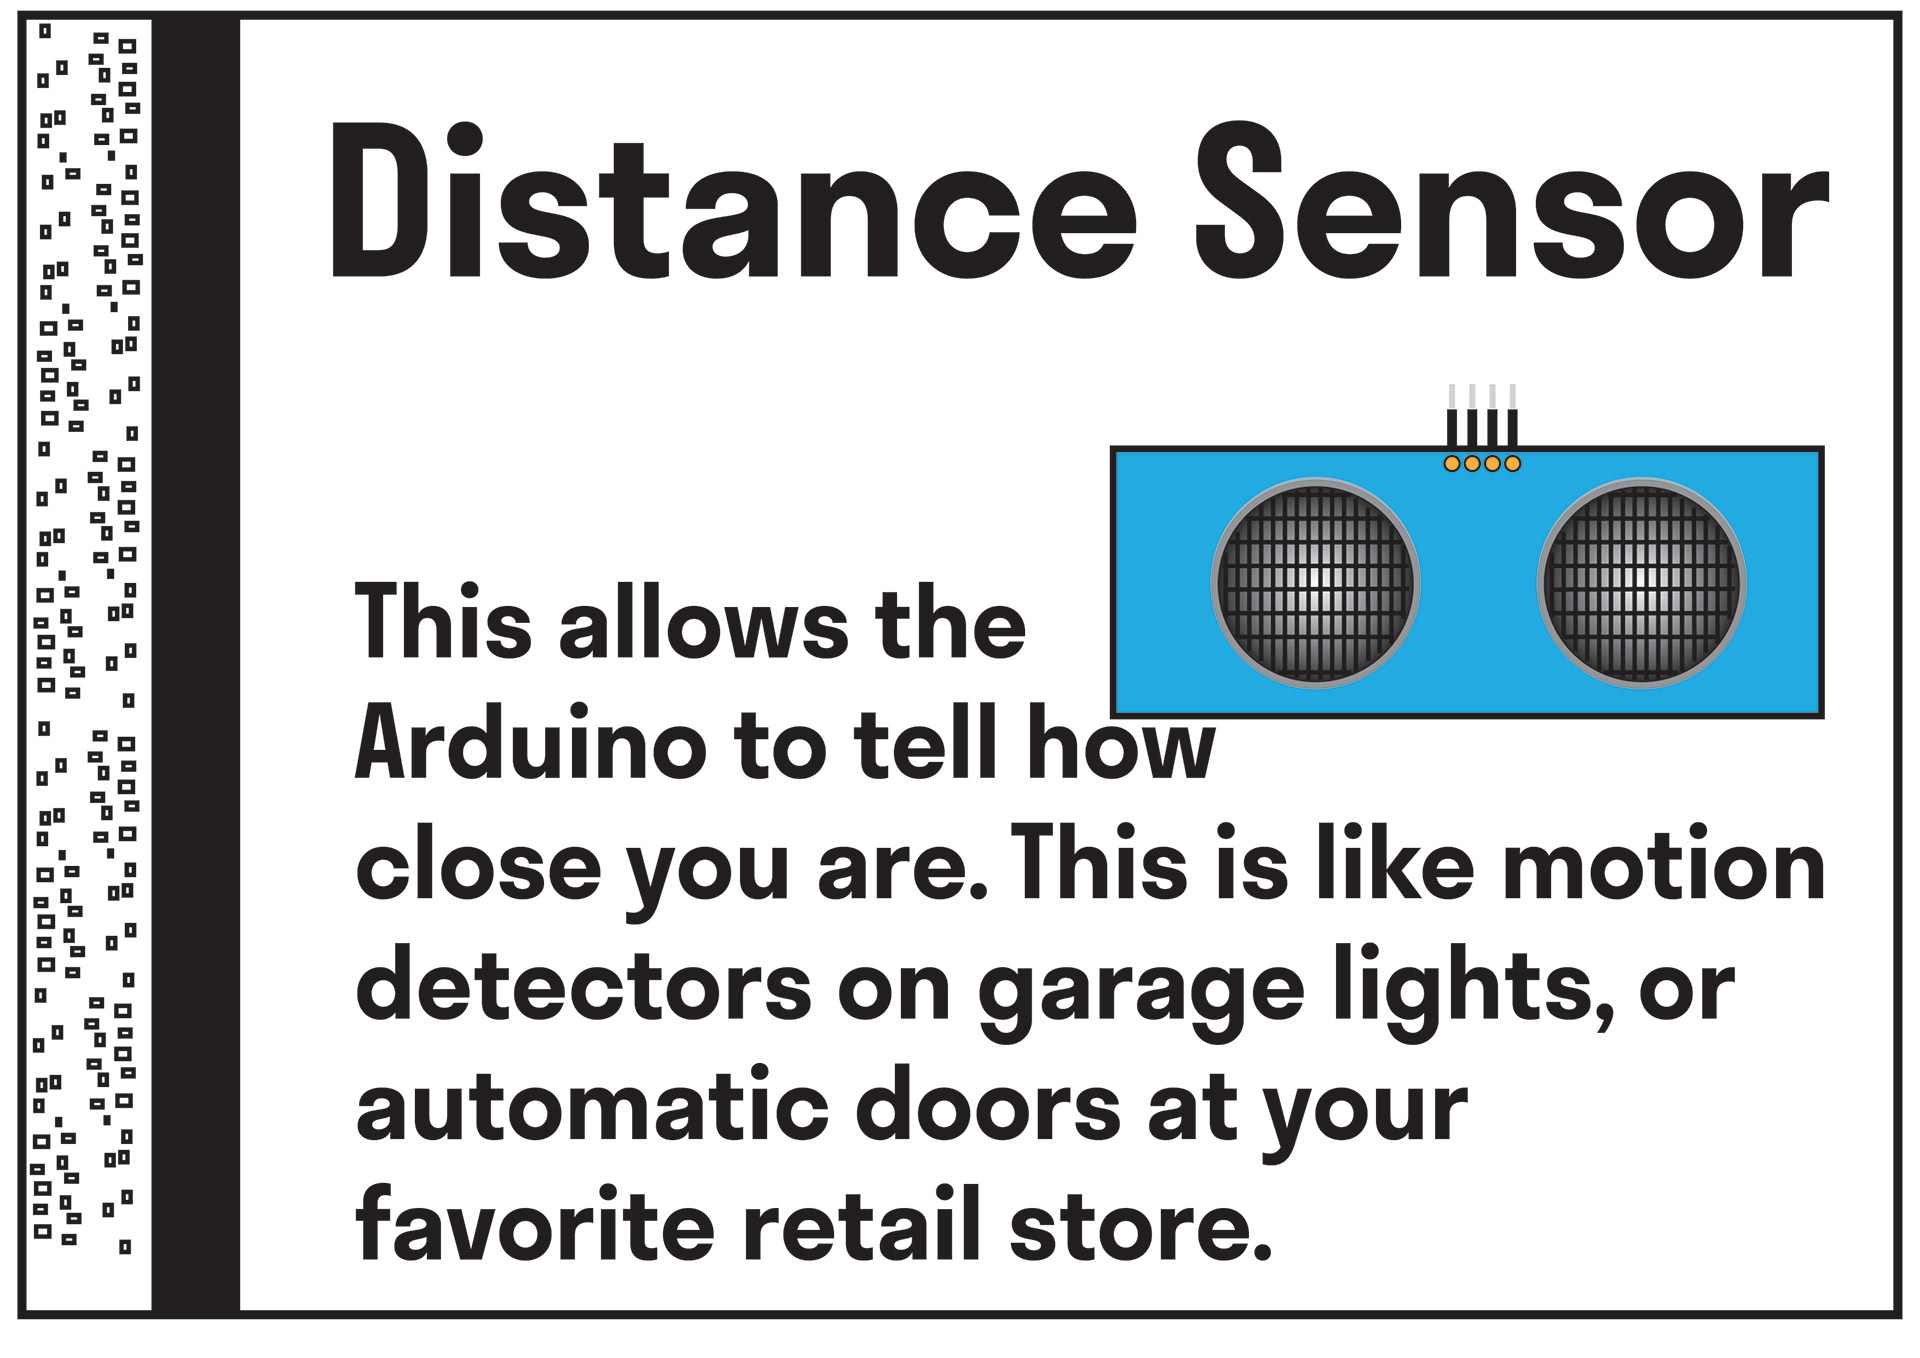 Distance sensor poster